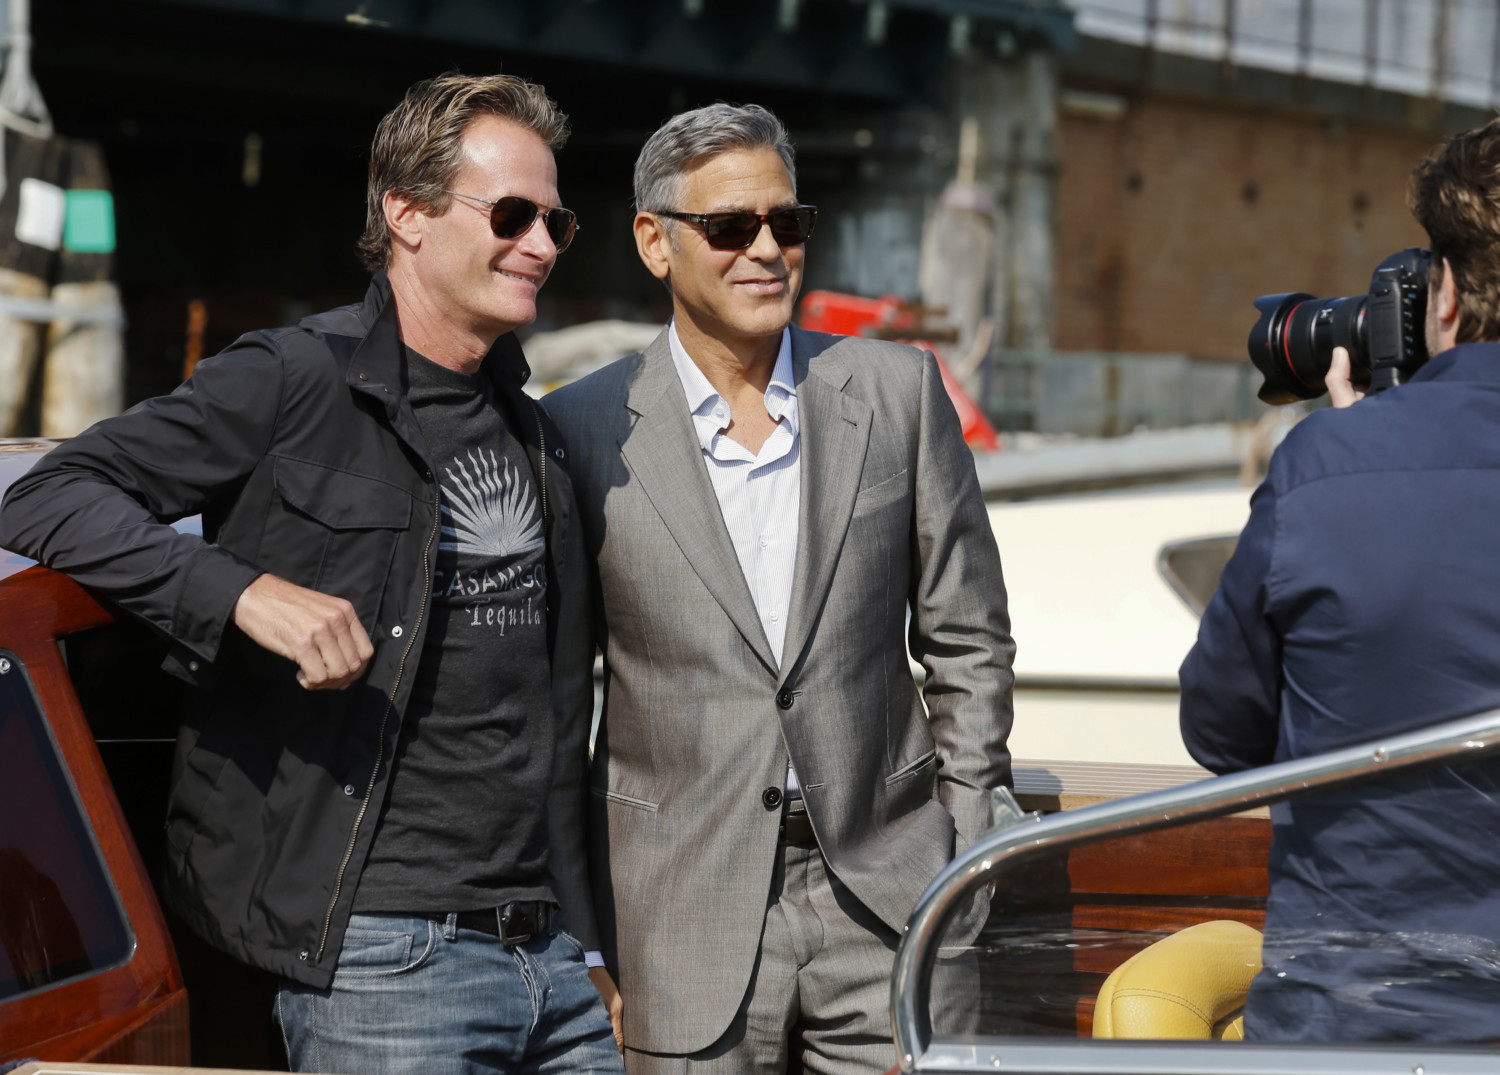 George Clooney poses with Rande Gerber